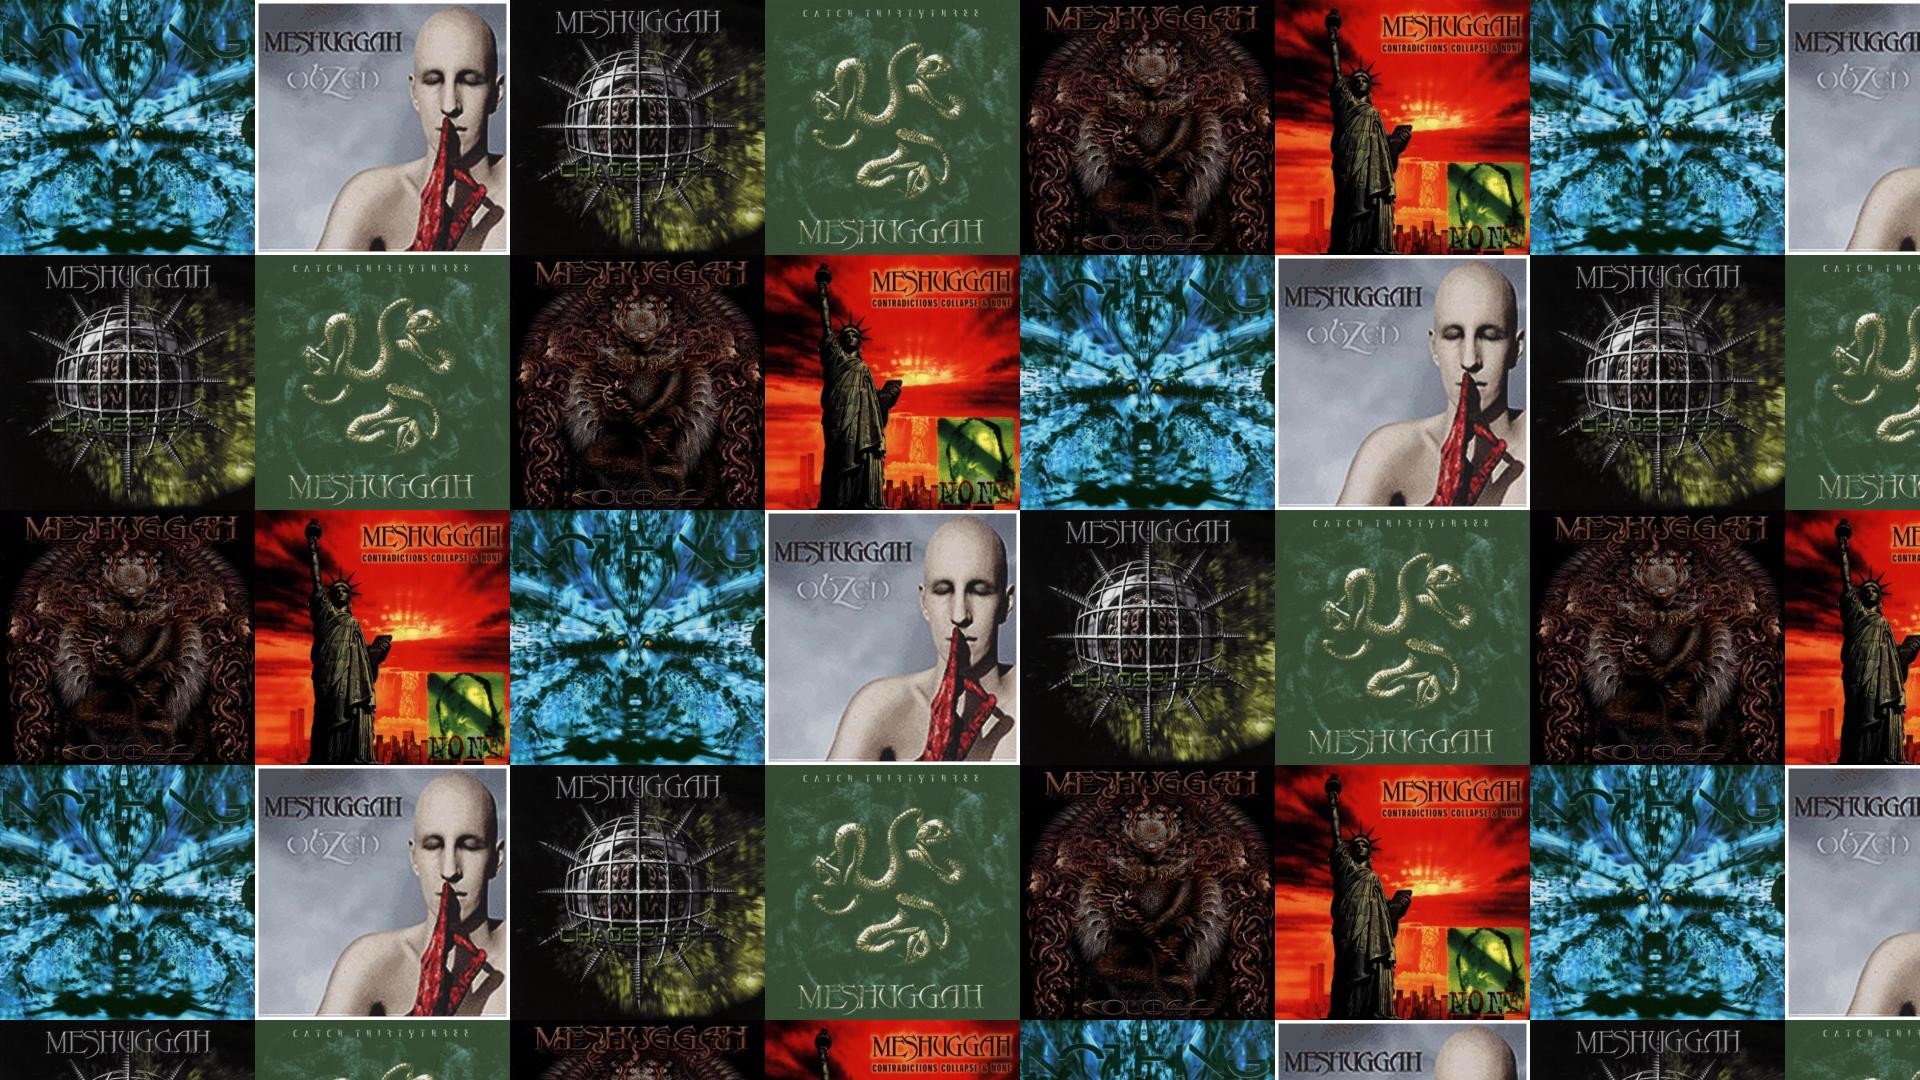 1920x1080 Meshuggah Nothing Obzen Chaosphere Catch 33 Koloss None Wallpaper Â« Tiled  Desktop Wallpaper